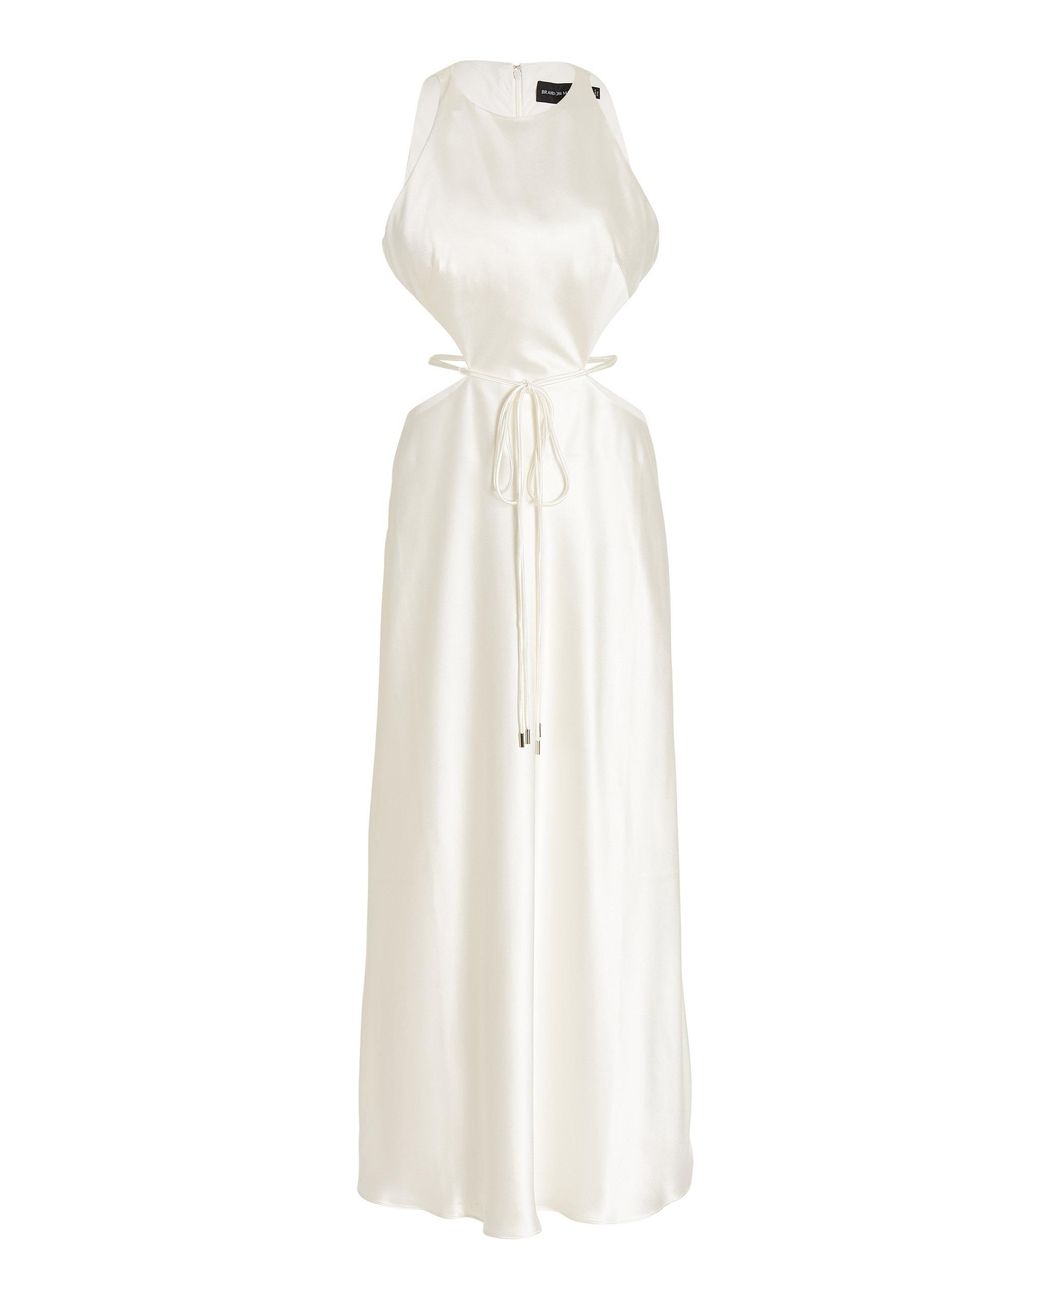 Brandon Maxwell Custom Made Used Wedding Dress Save 59% - Stillwhite